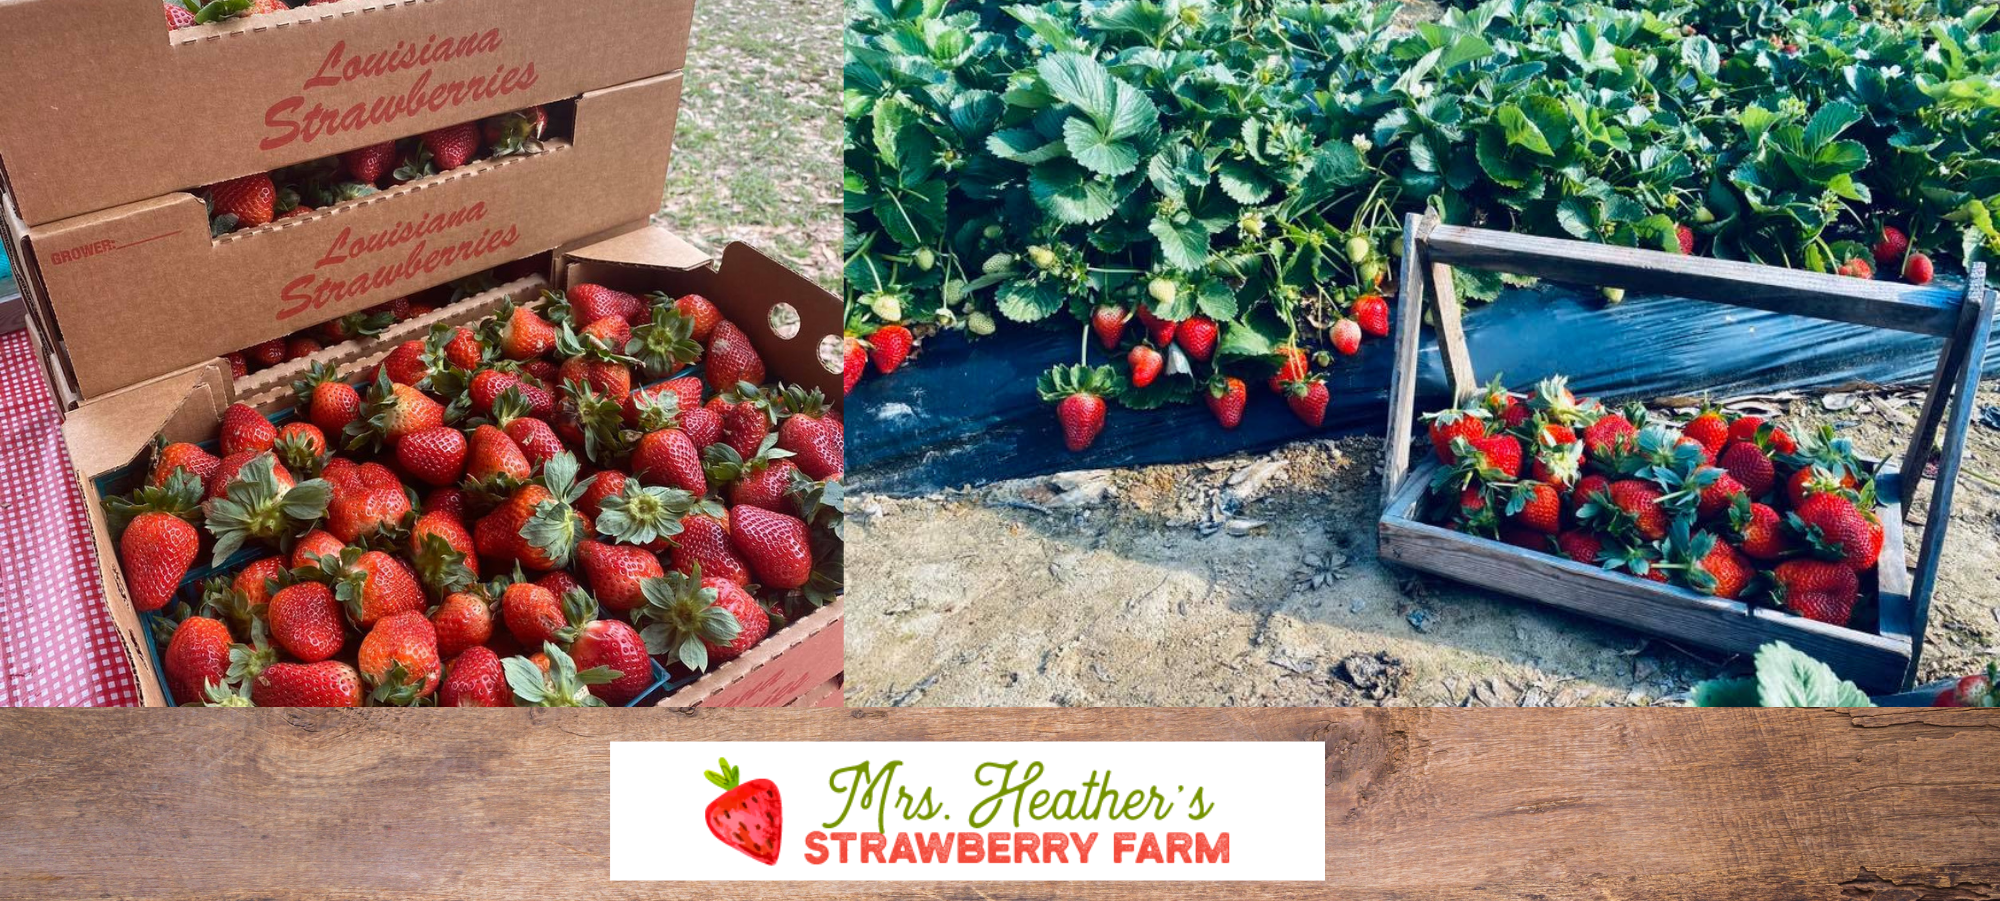 strawberry farm collage